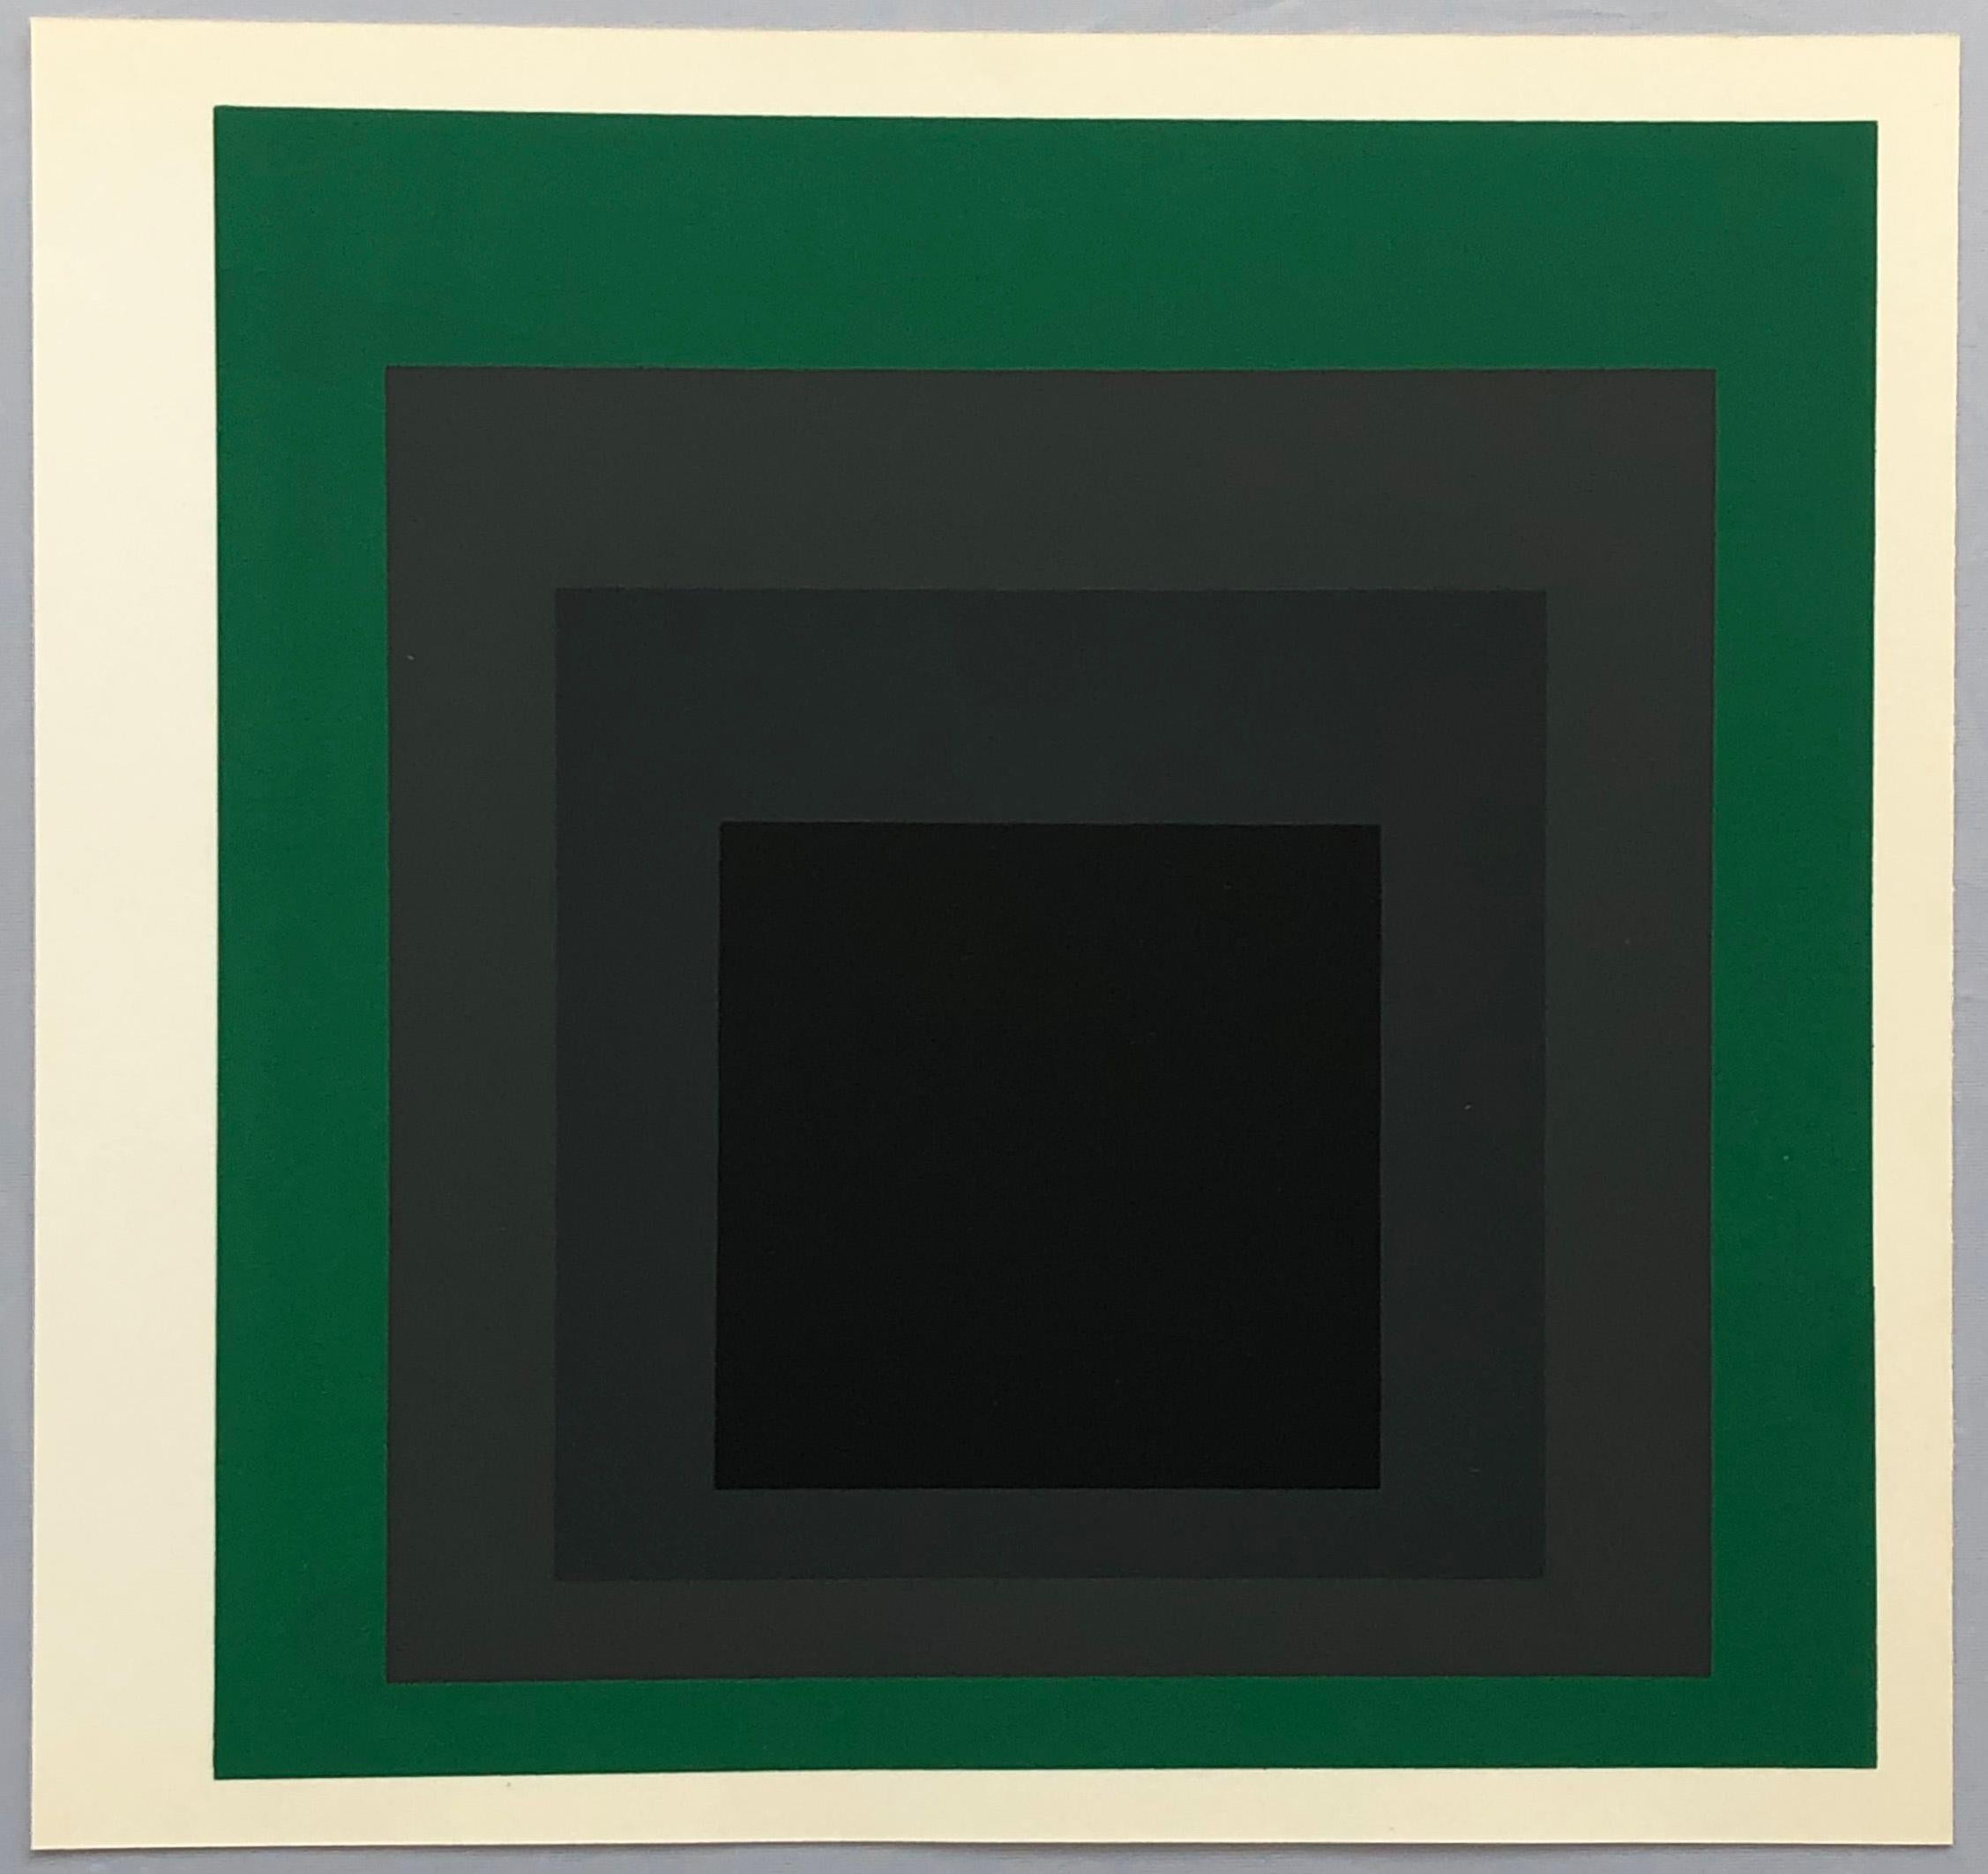 Josef Albers Homage to the Square screen-print 1977 (Josef Albers prints)  - Minimalist Print by (after) Josef Albers